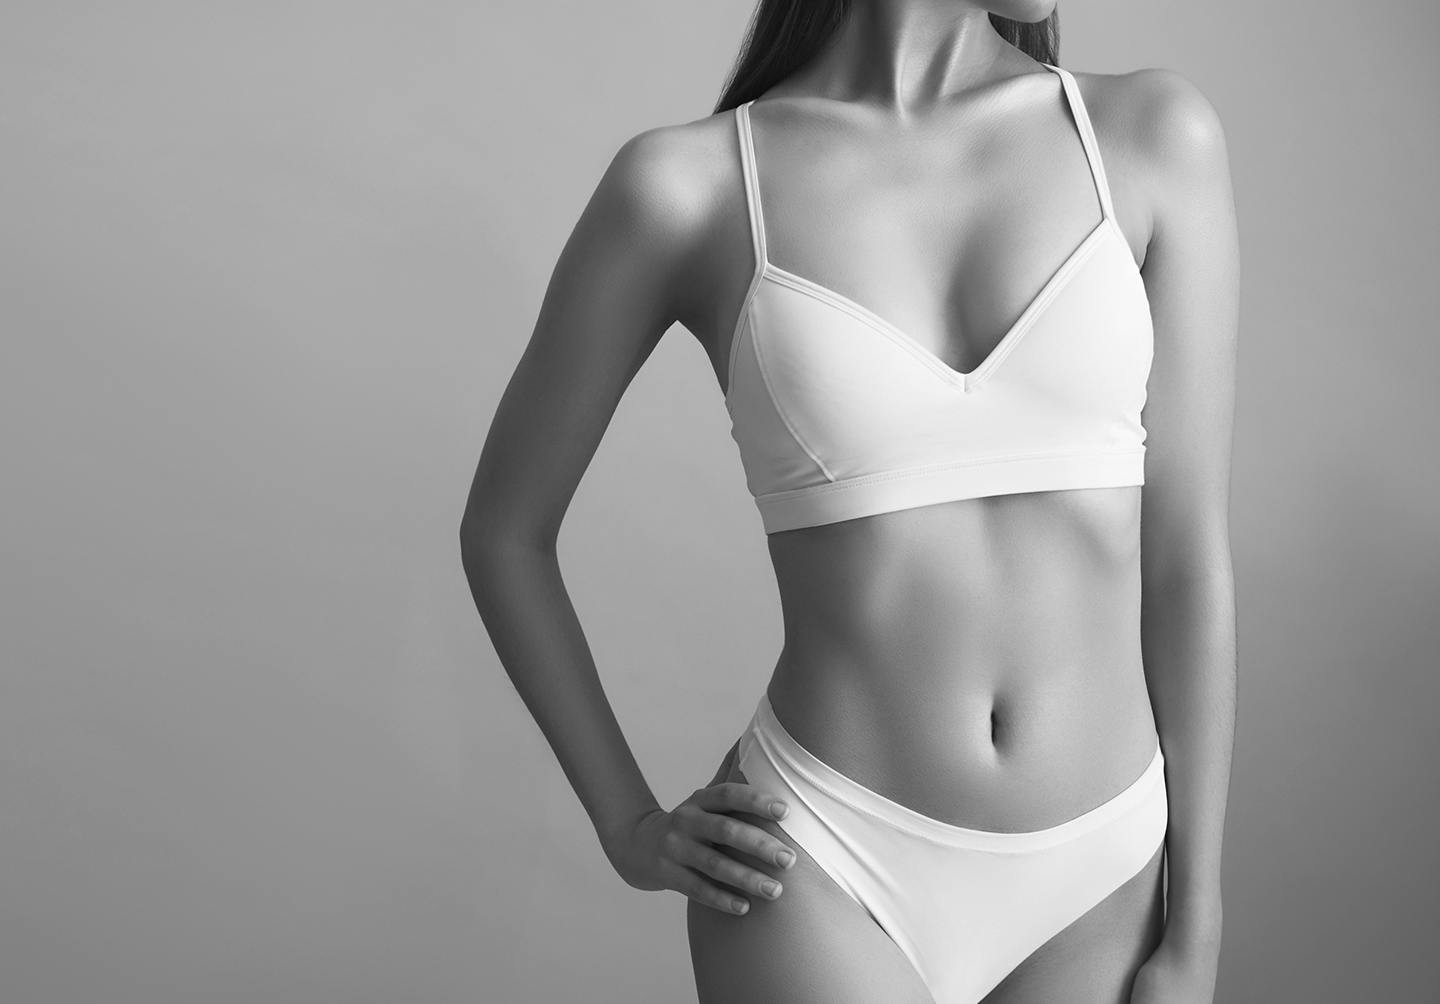 Woman posing wearing white underwear.